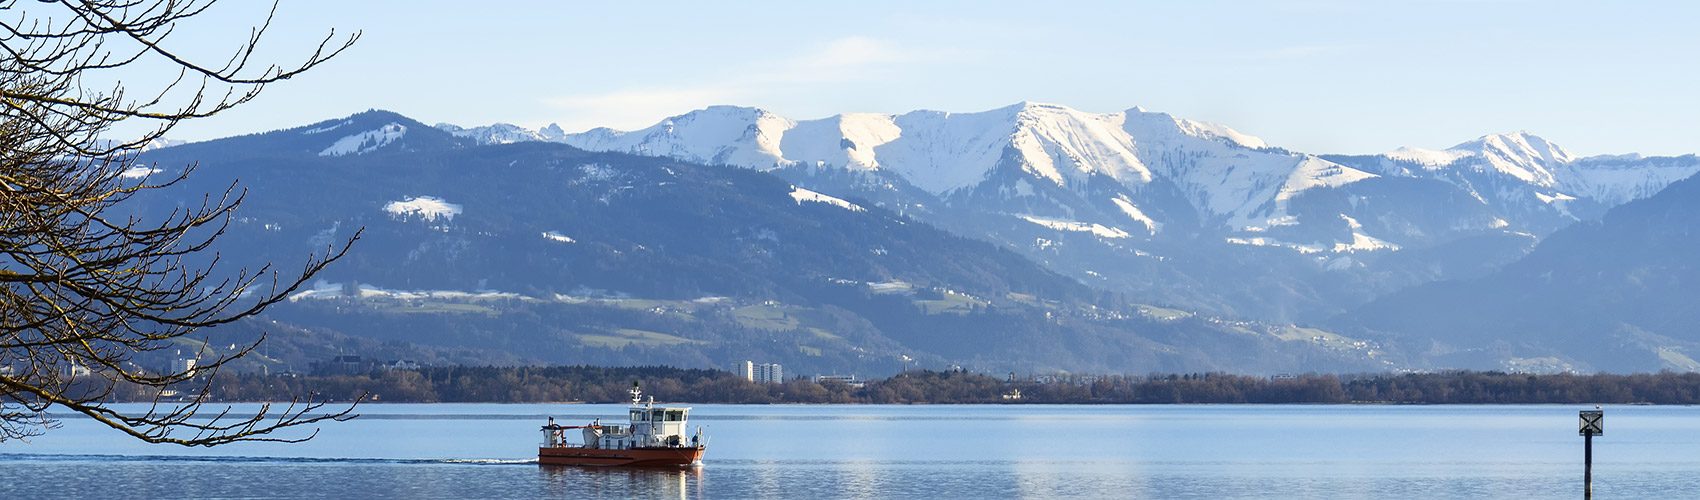 Bavaria, Austrian Alps & Lake Constance